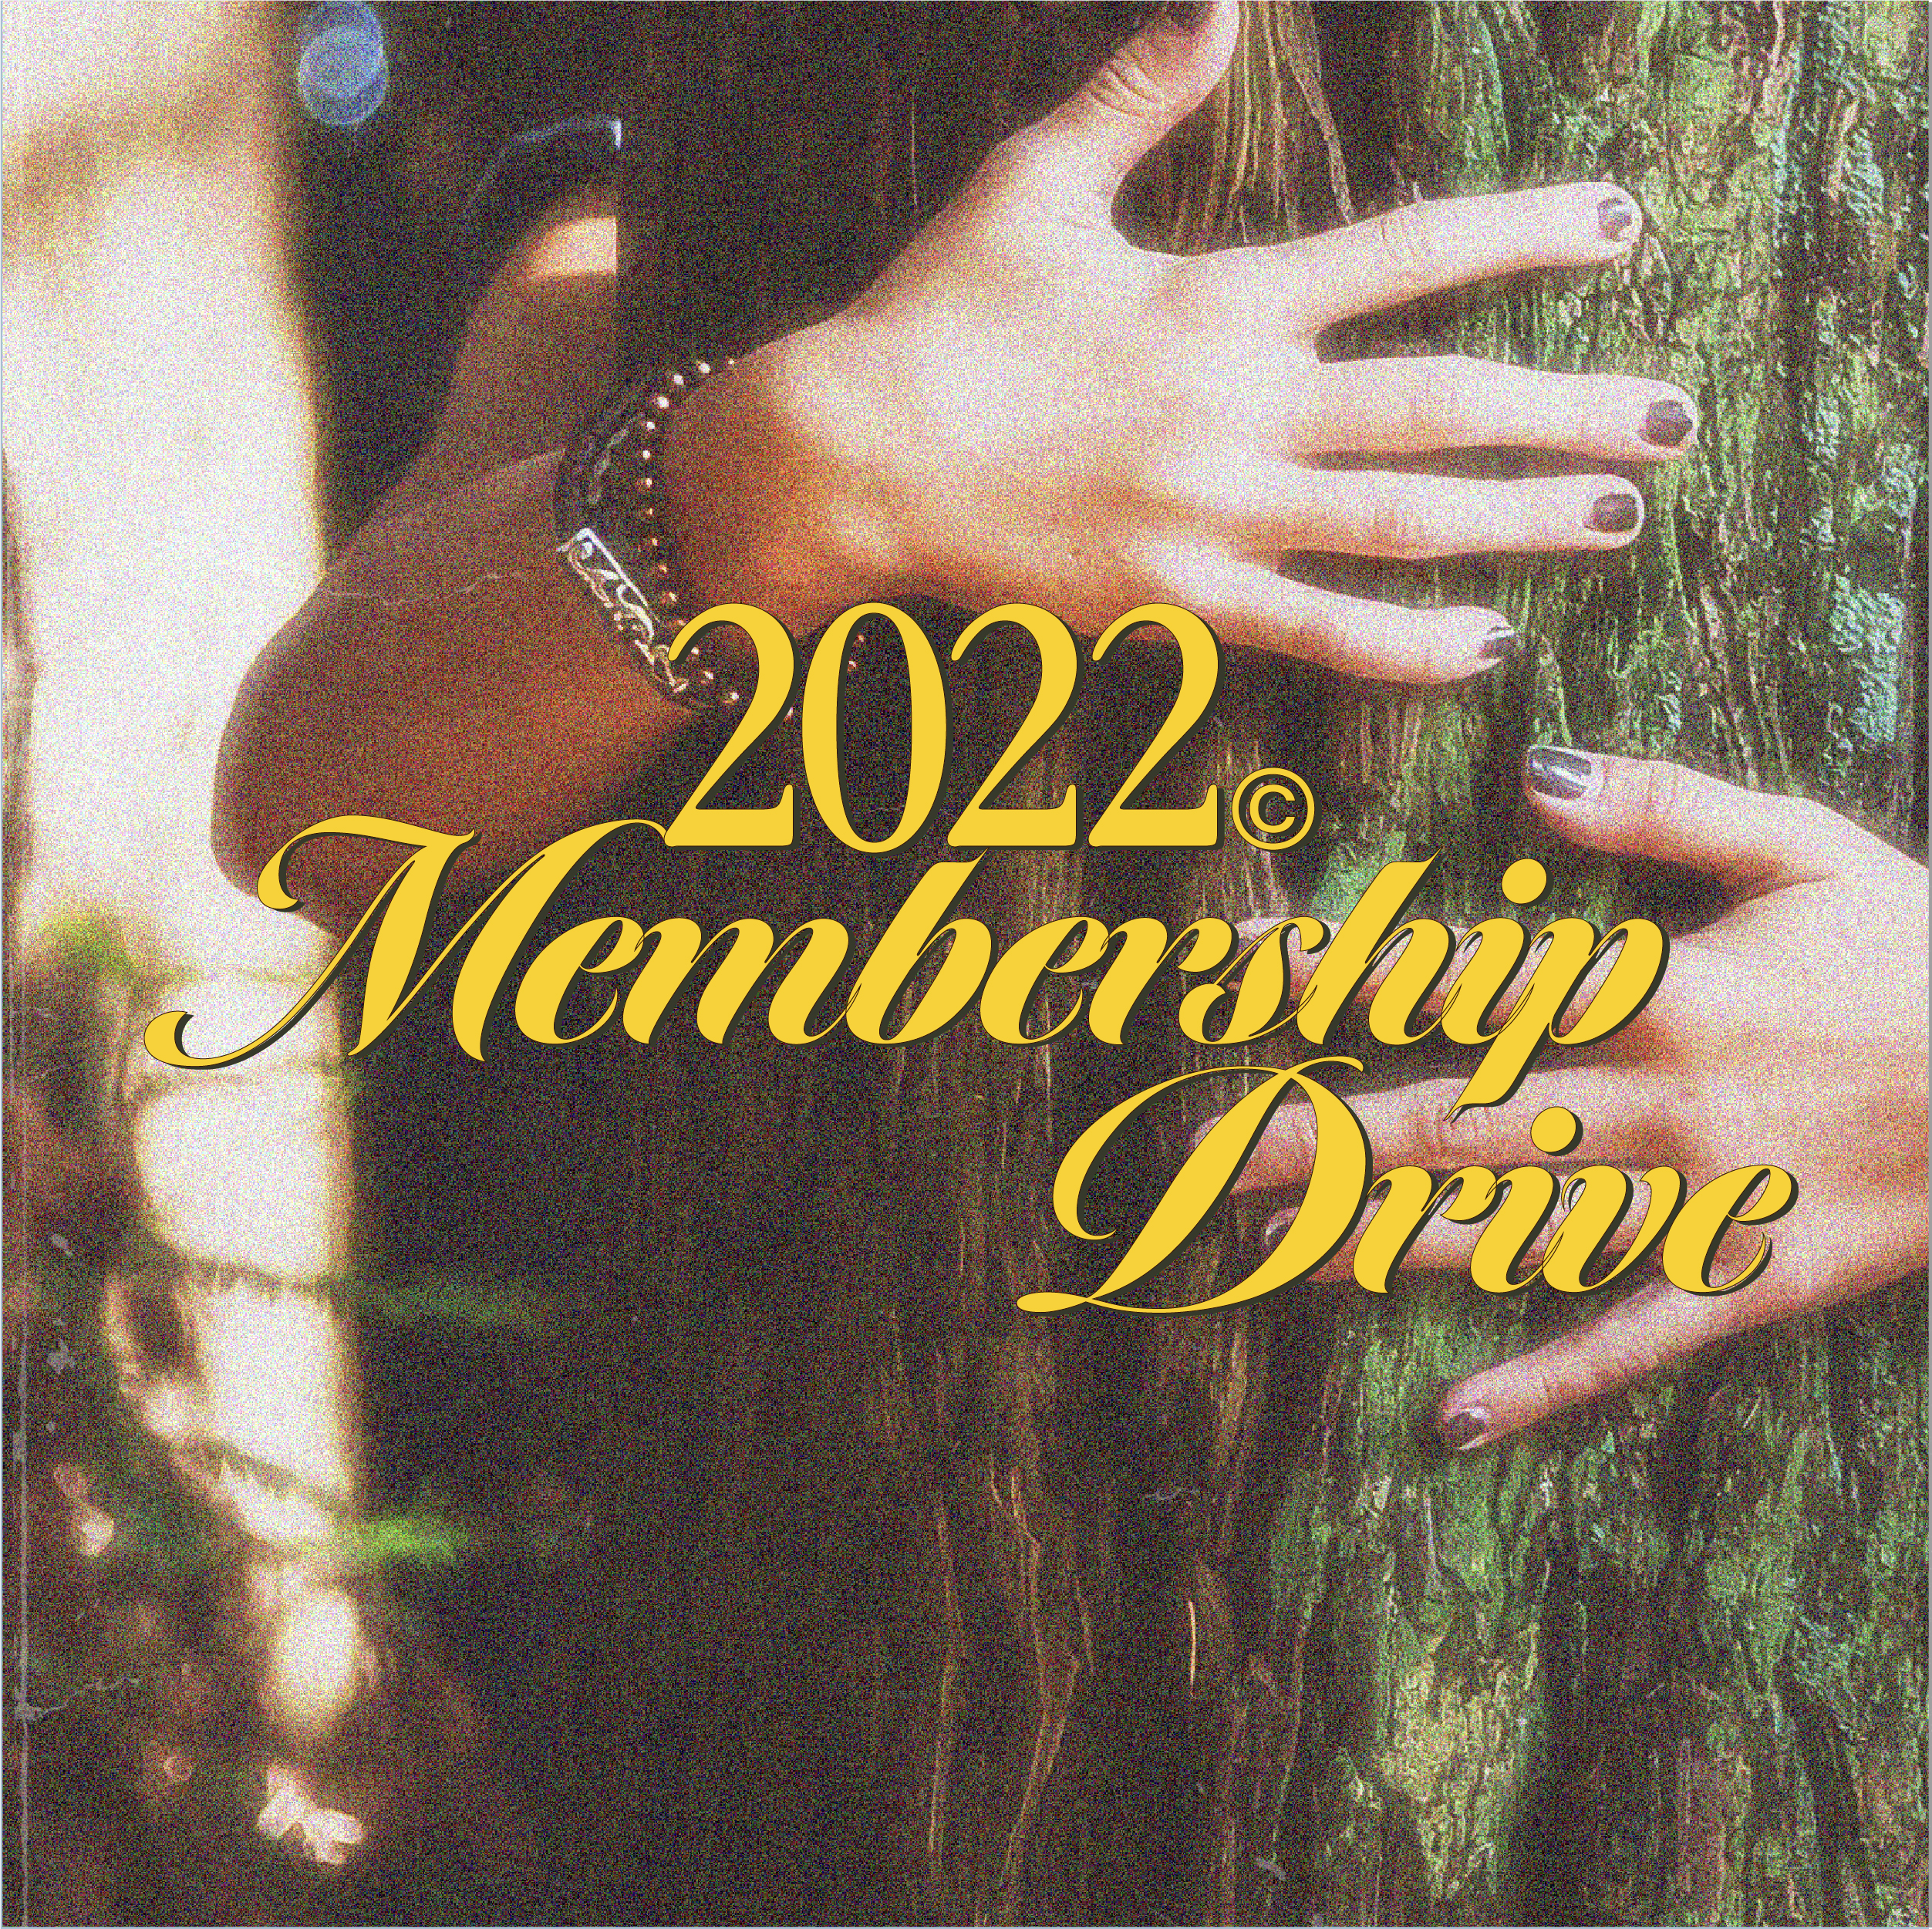 FCCW Membership Drive 2022